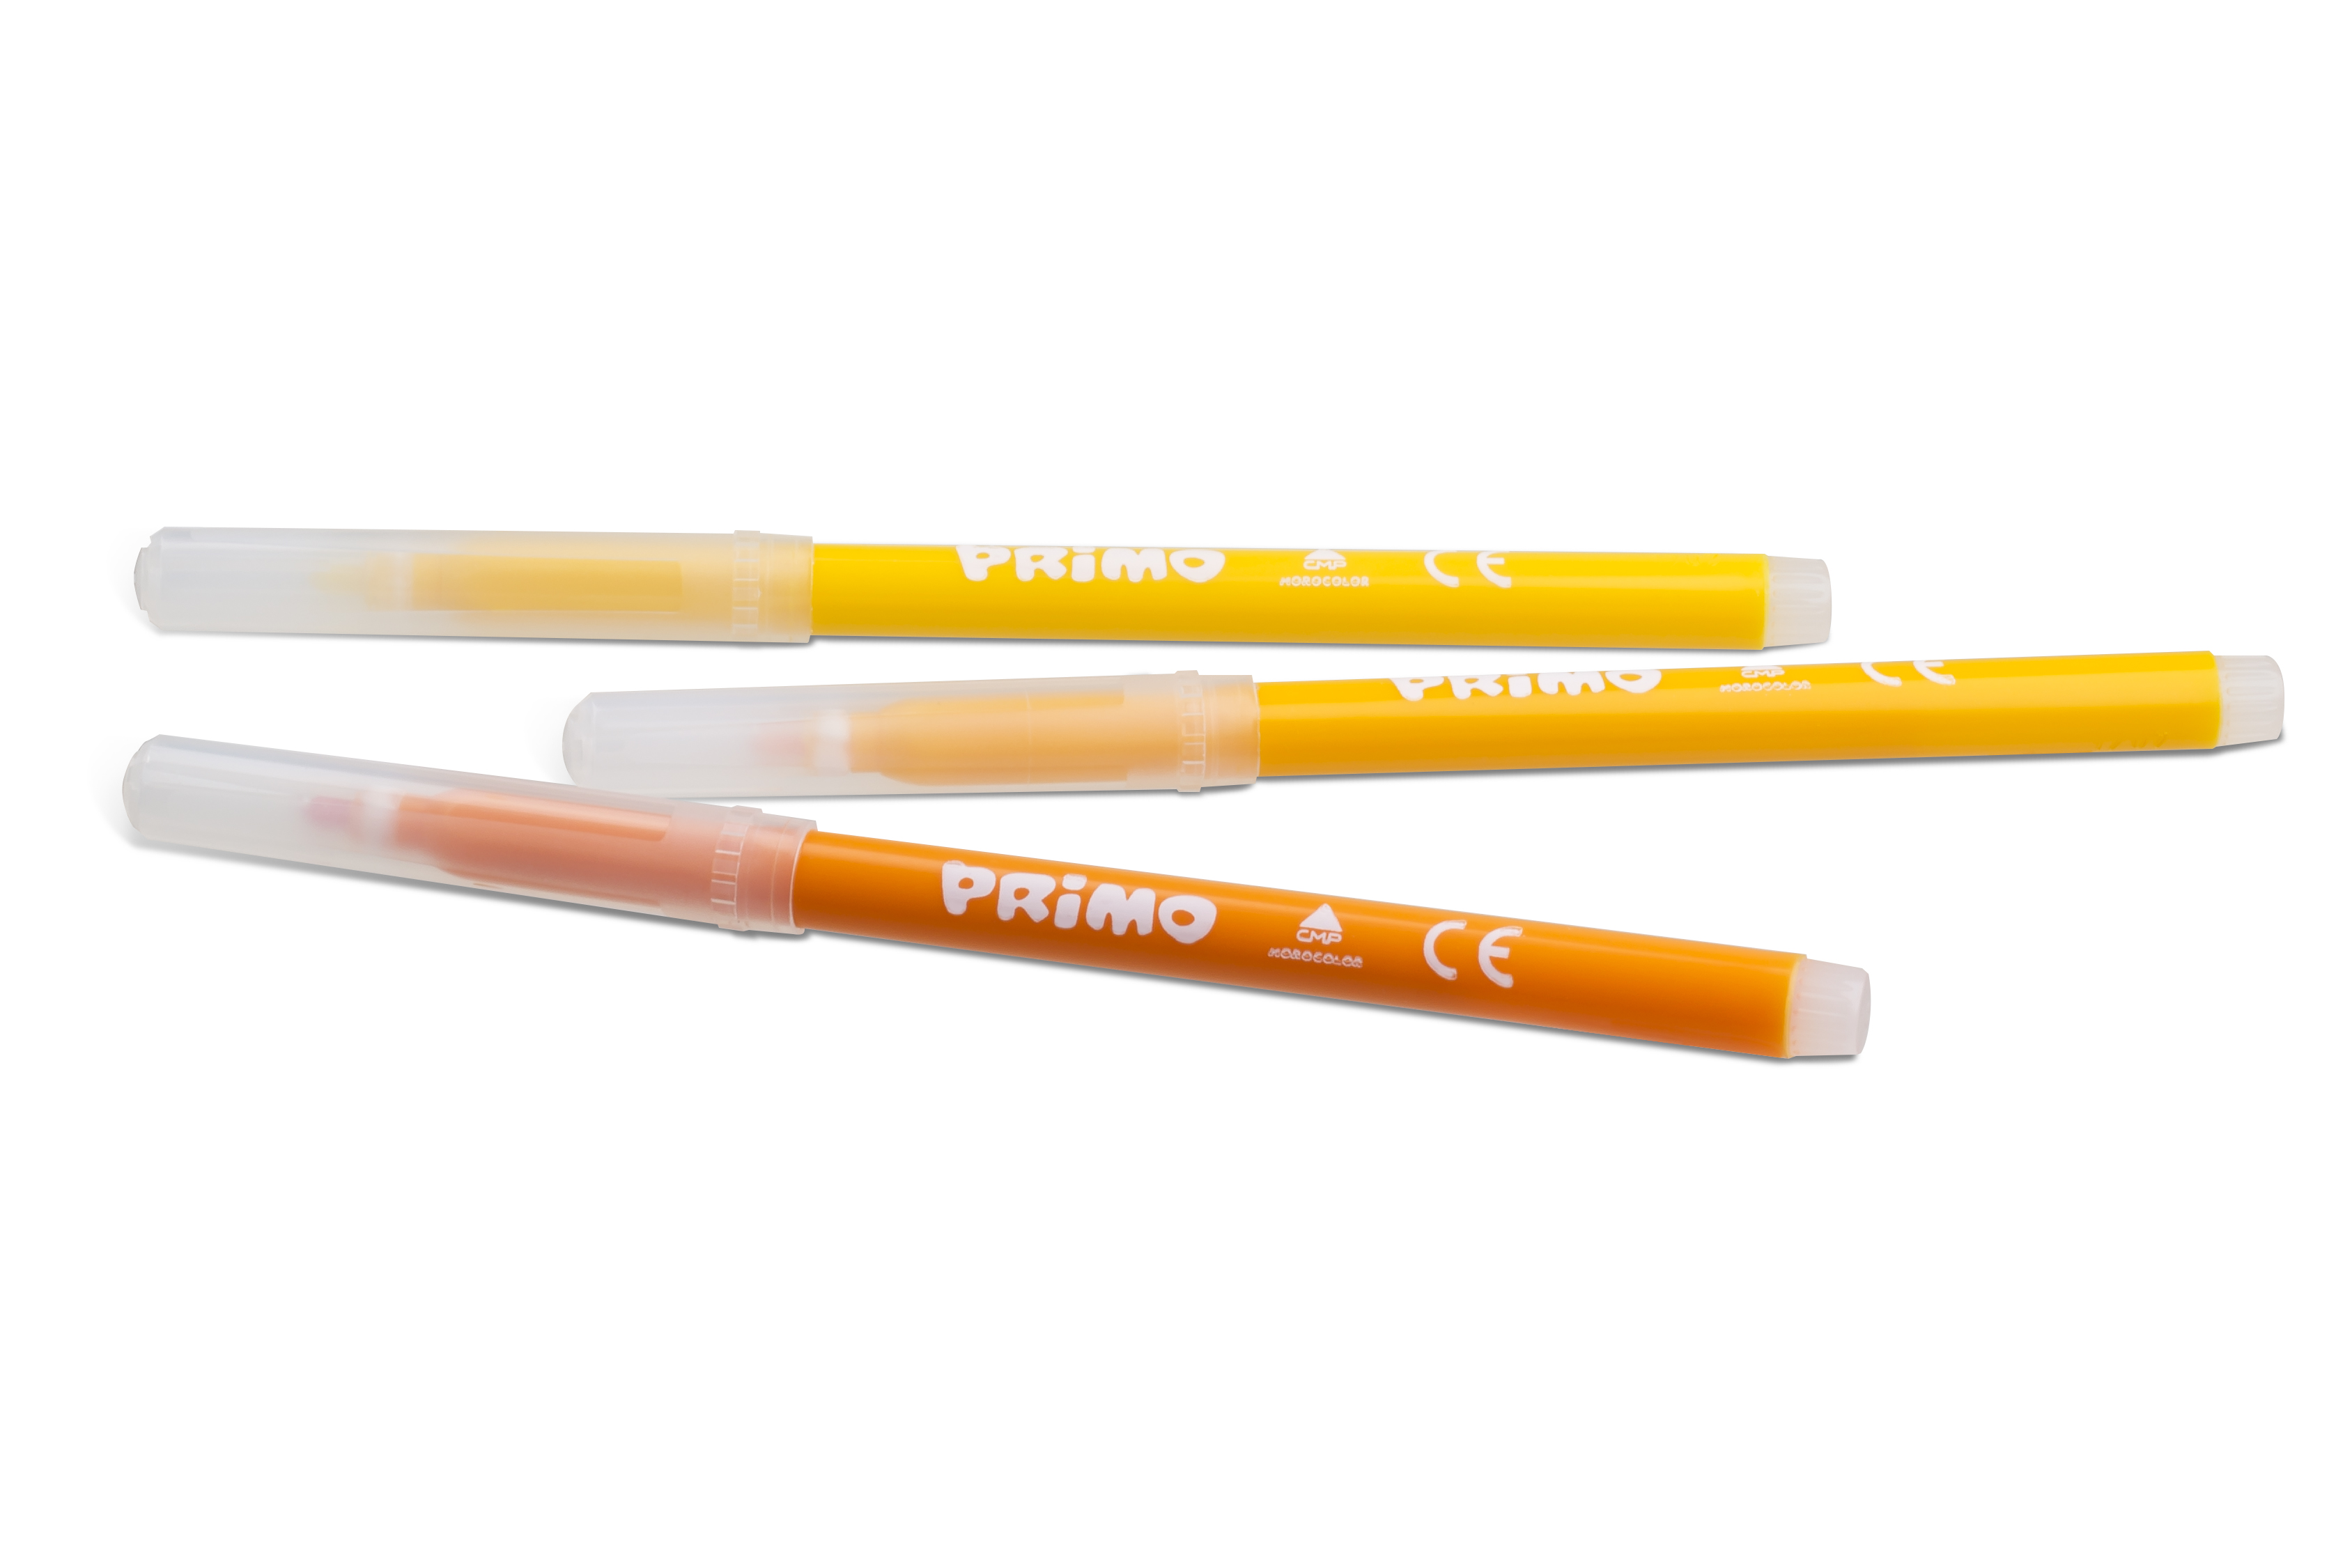 PRIMO fiber pen 120 case